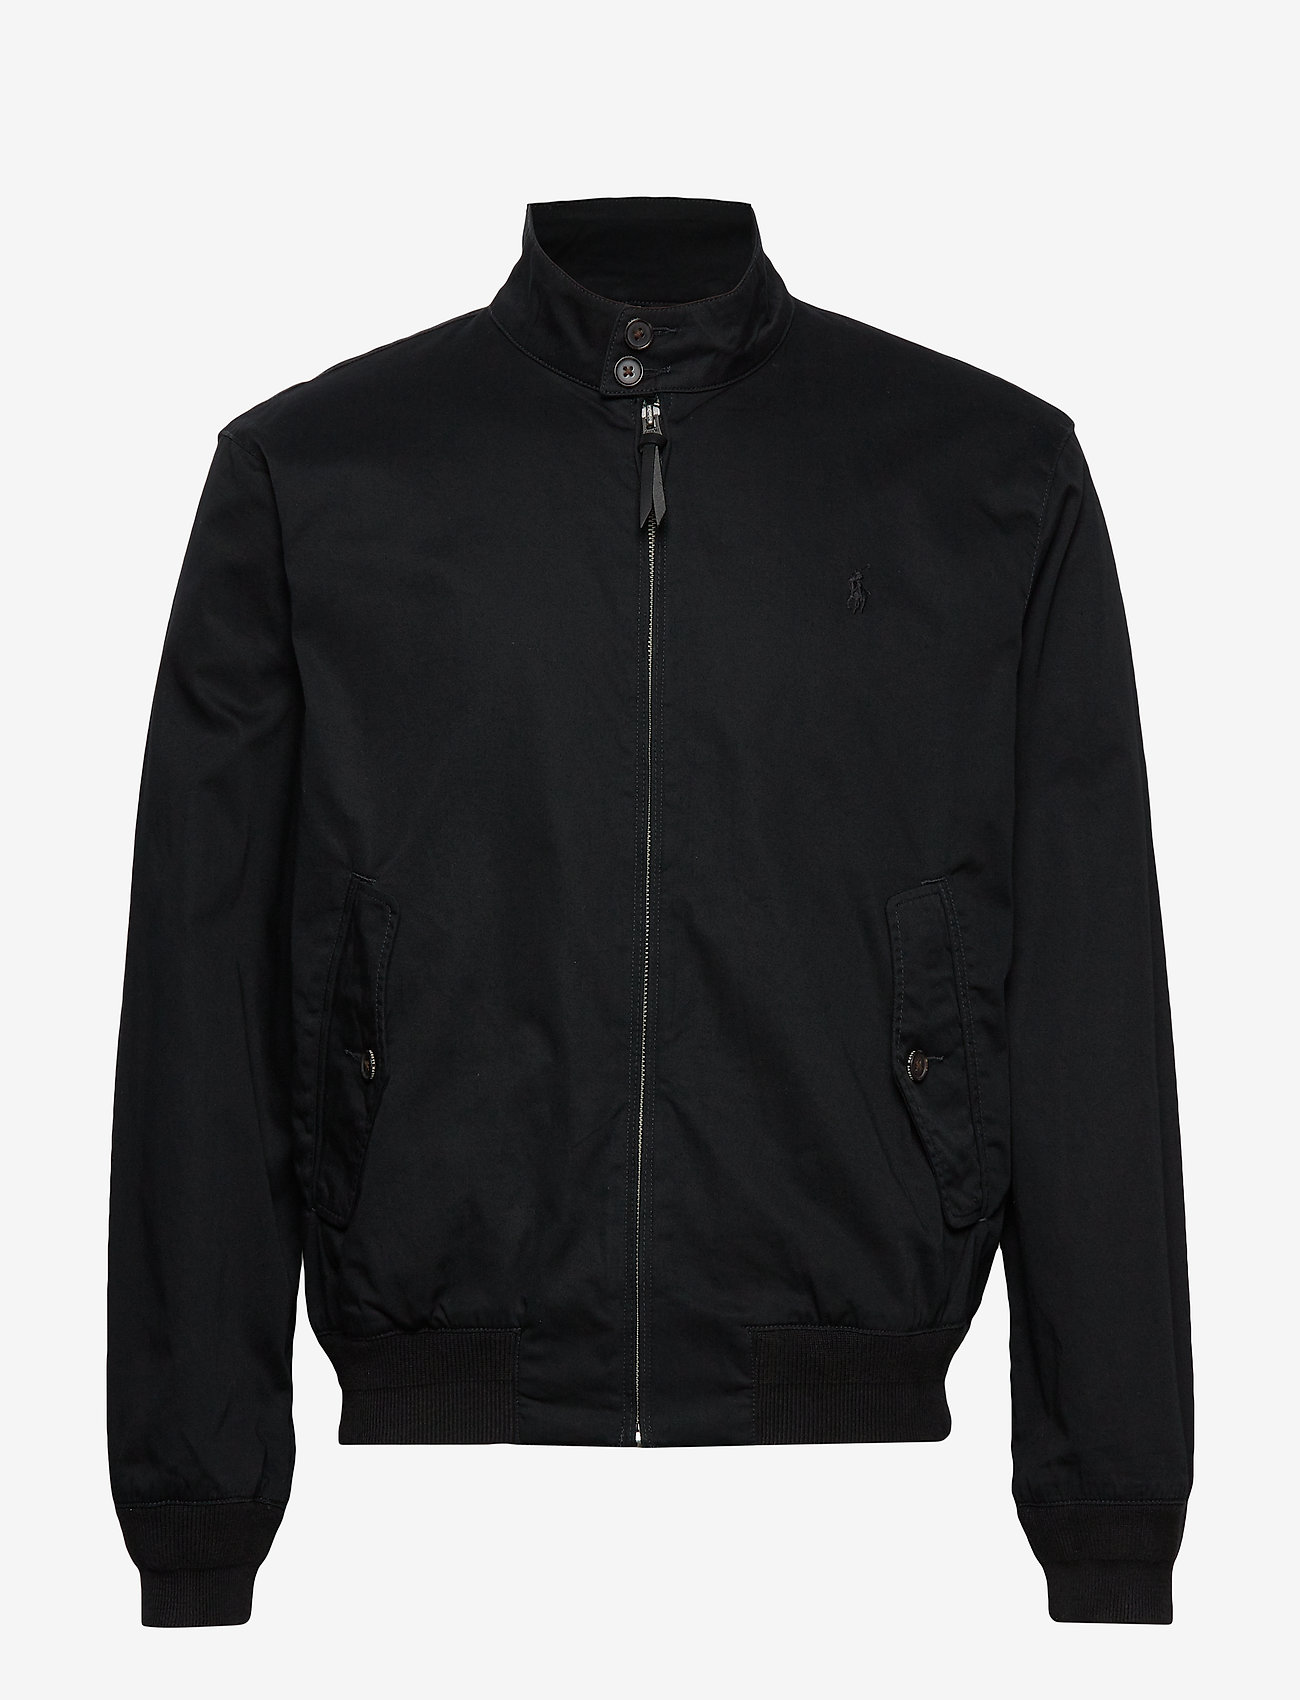 Cotton Twill Jacket (Polo Black) (149.40 €) - Polo Ralph Lauren ...